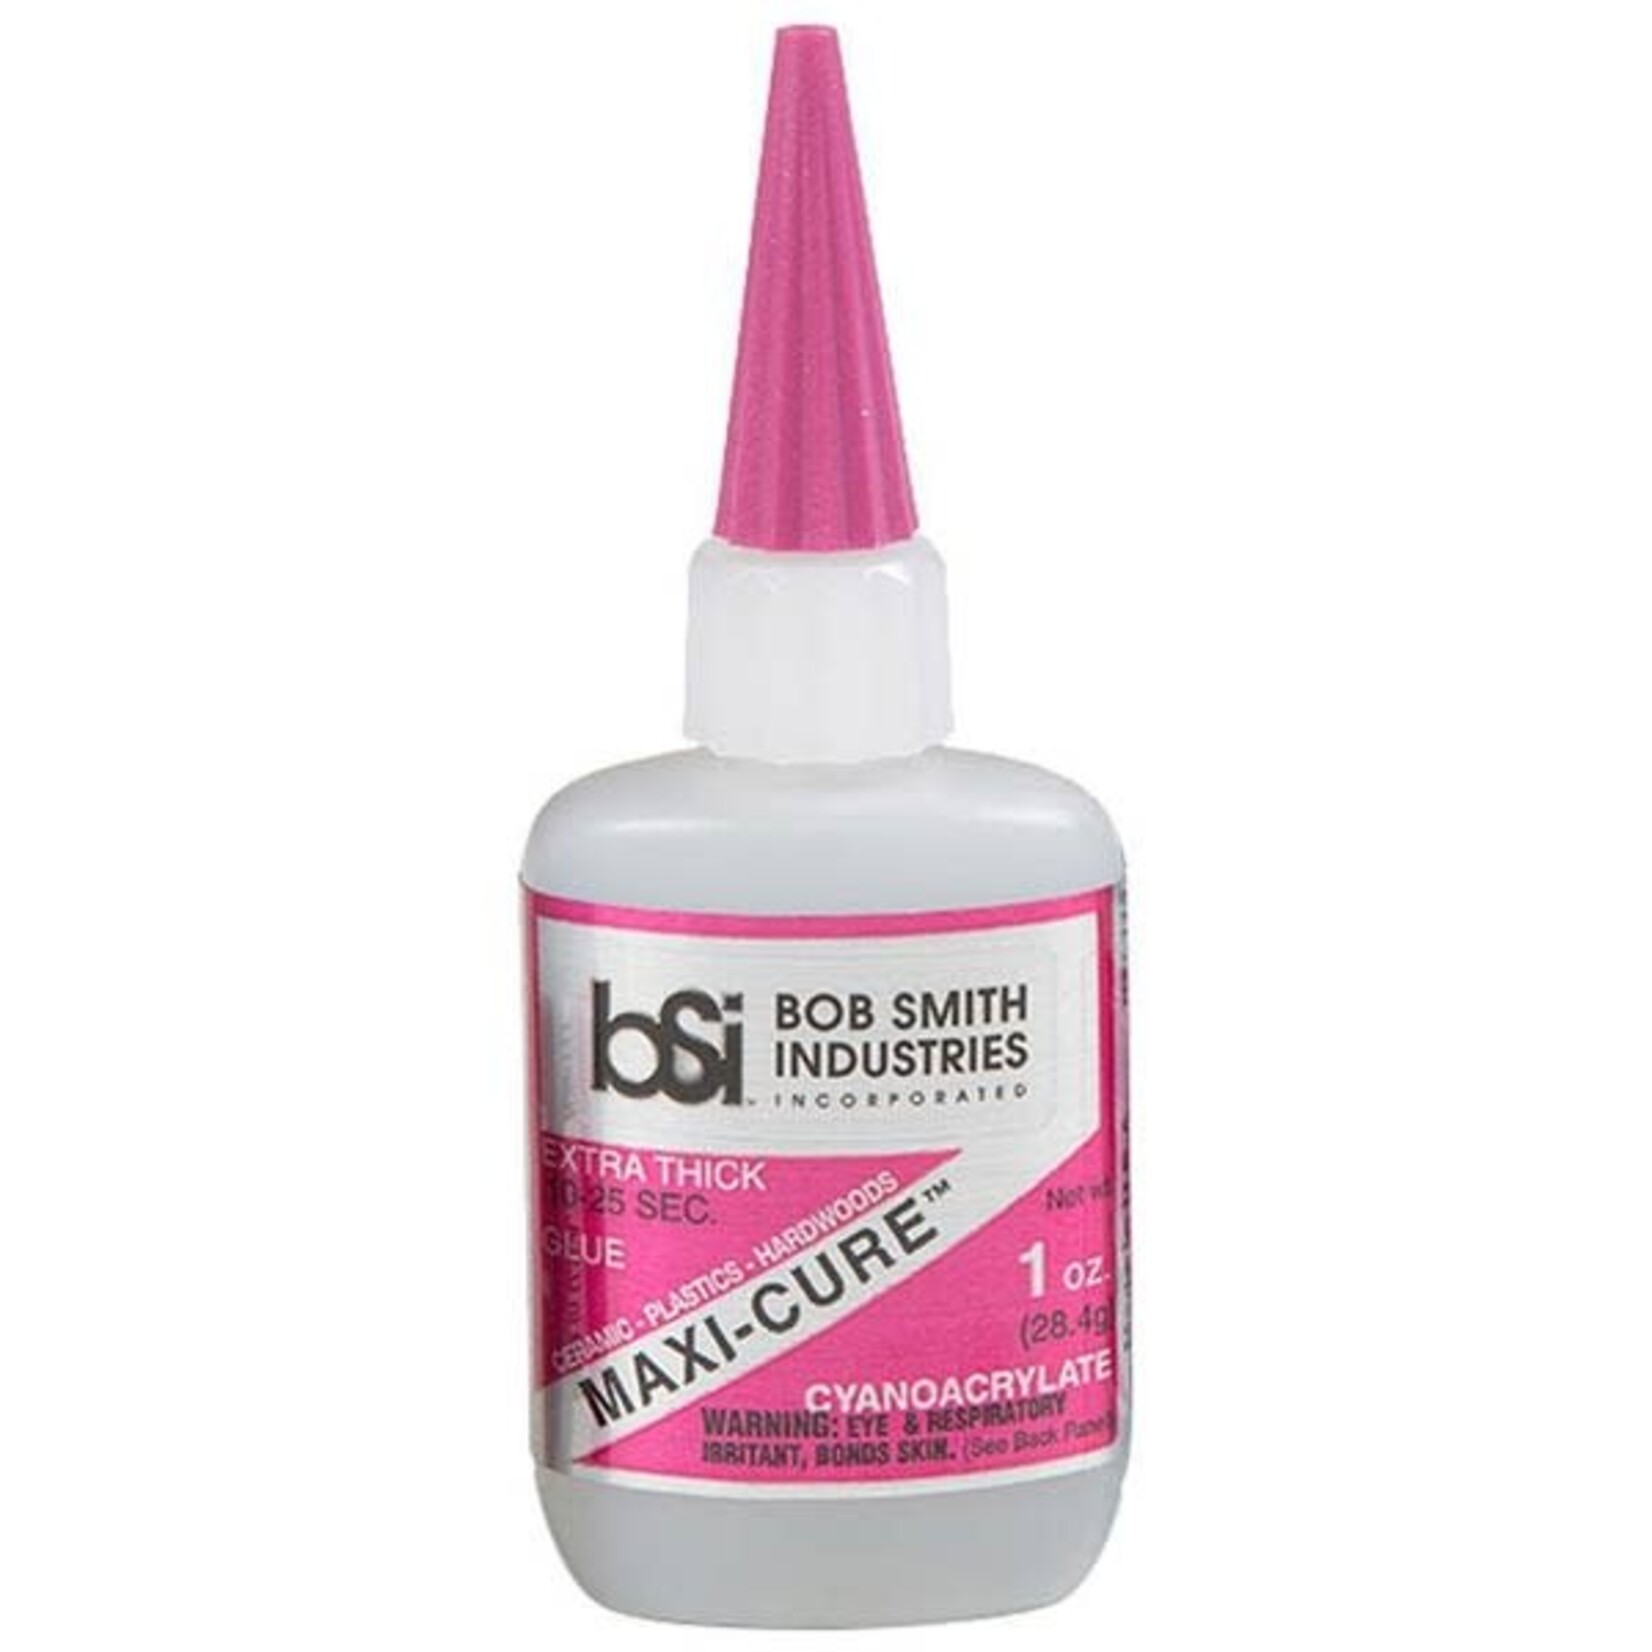 Bob Smith Industries Maxi-Cure Thick Gap Filling CA 1oz Pink